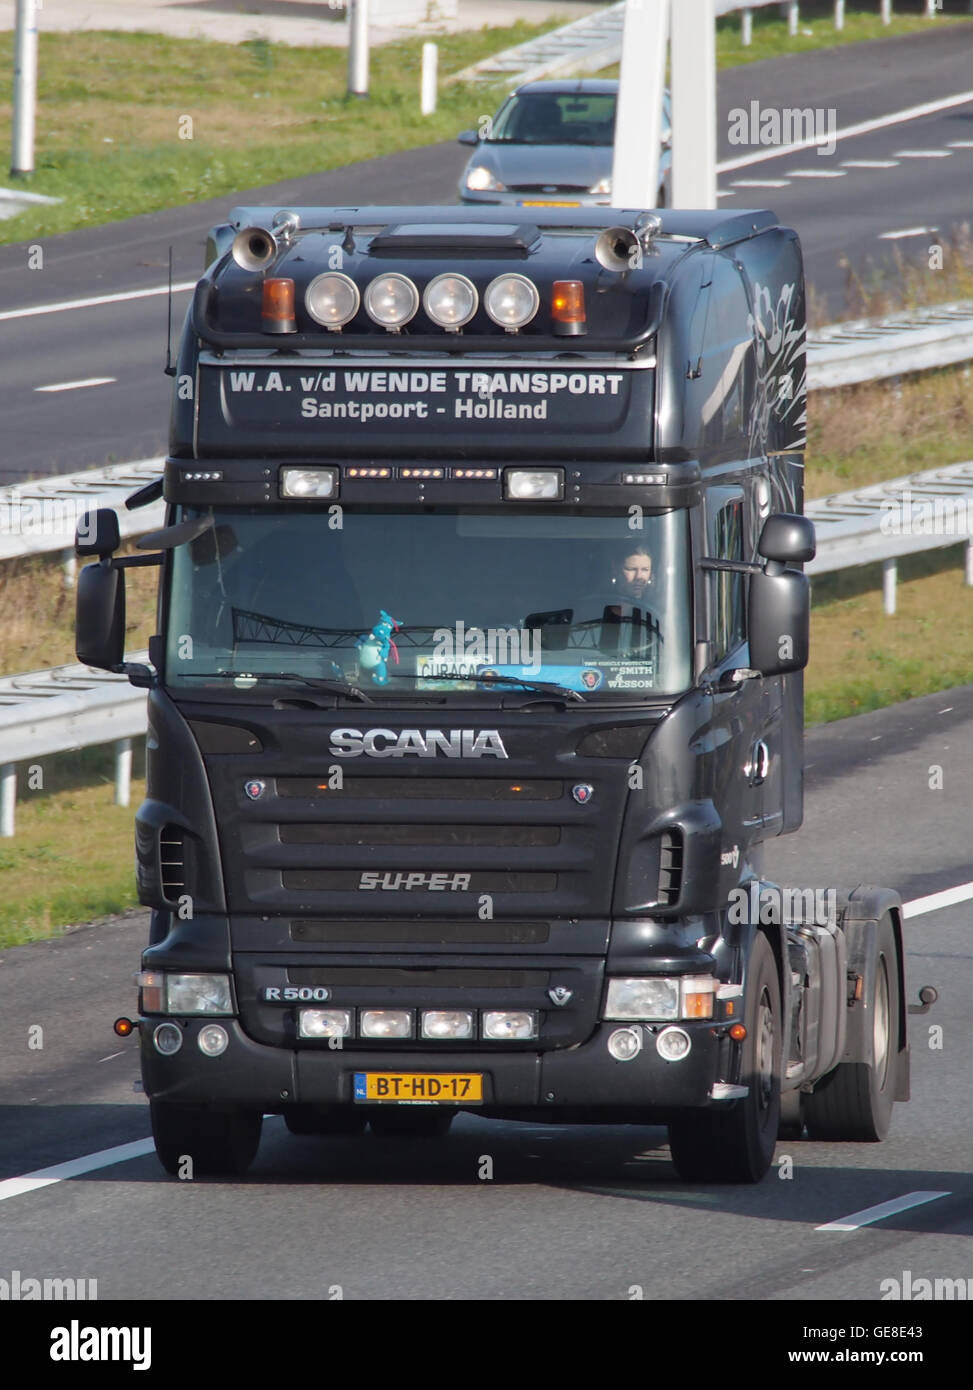 Scania R500, WA vd Wende Transport Stock Photo